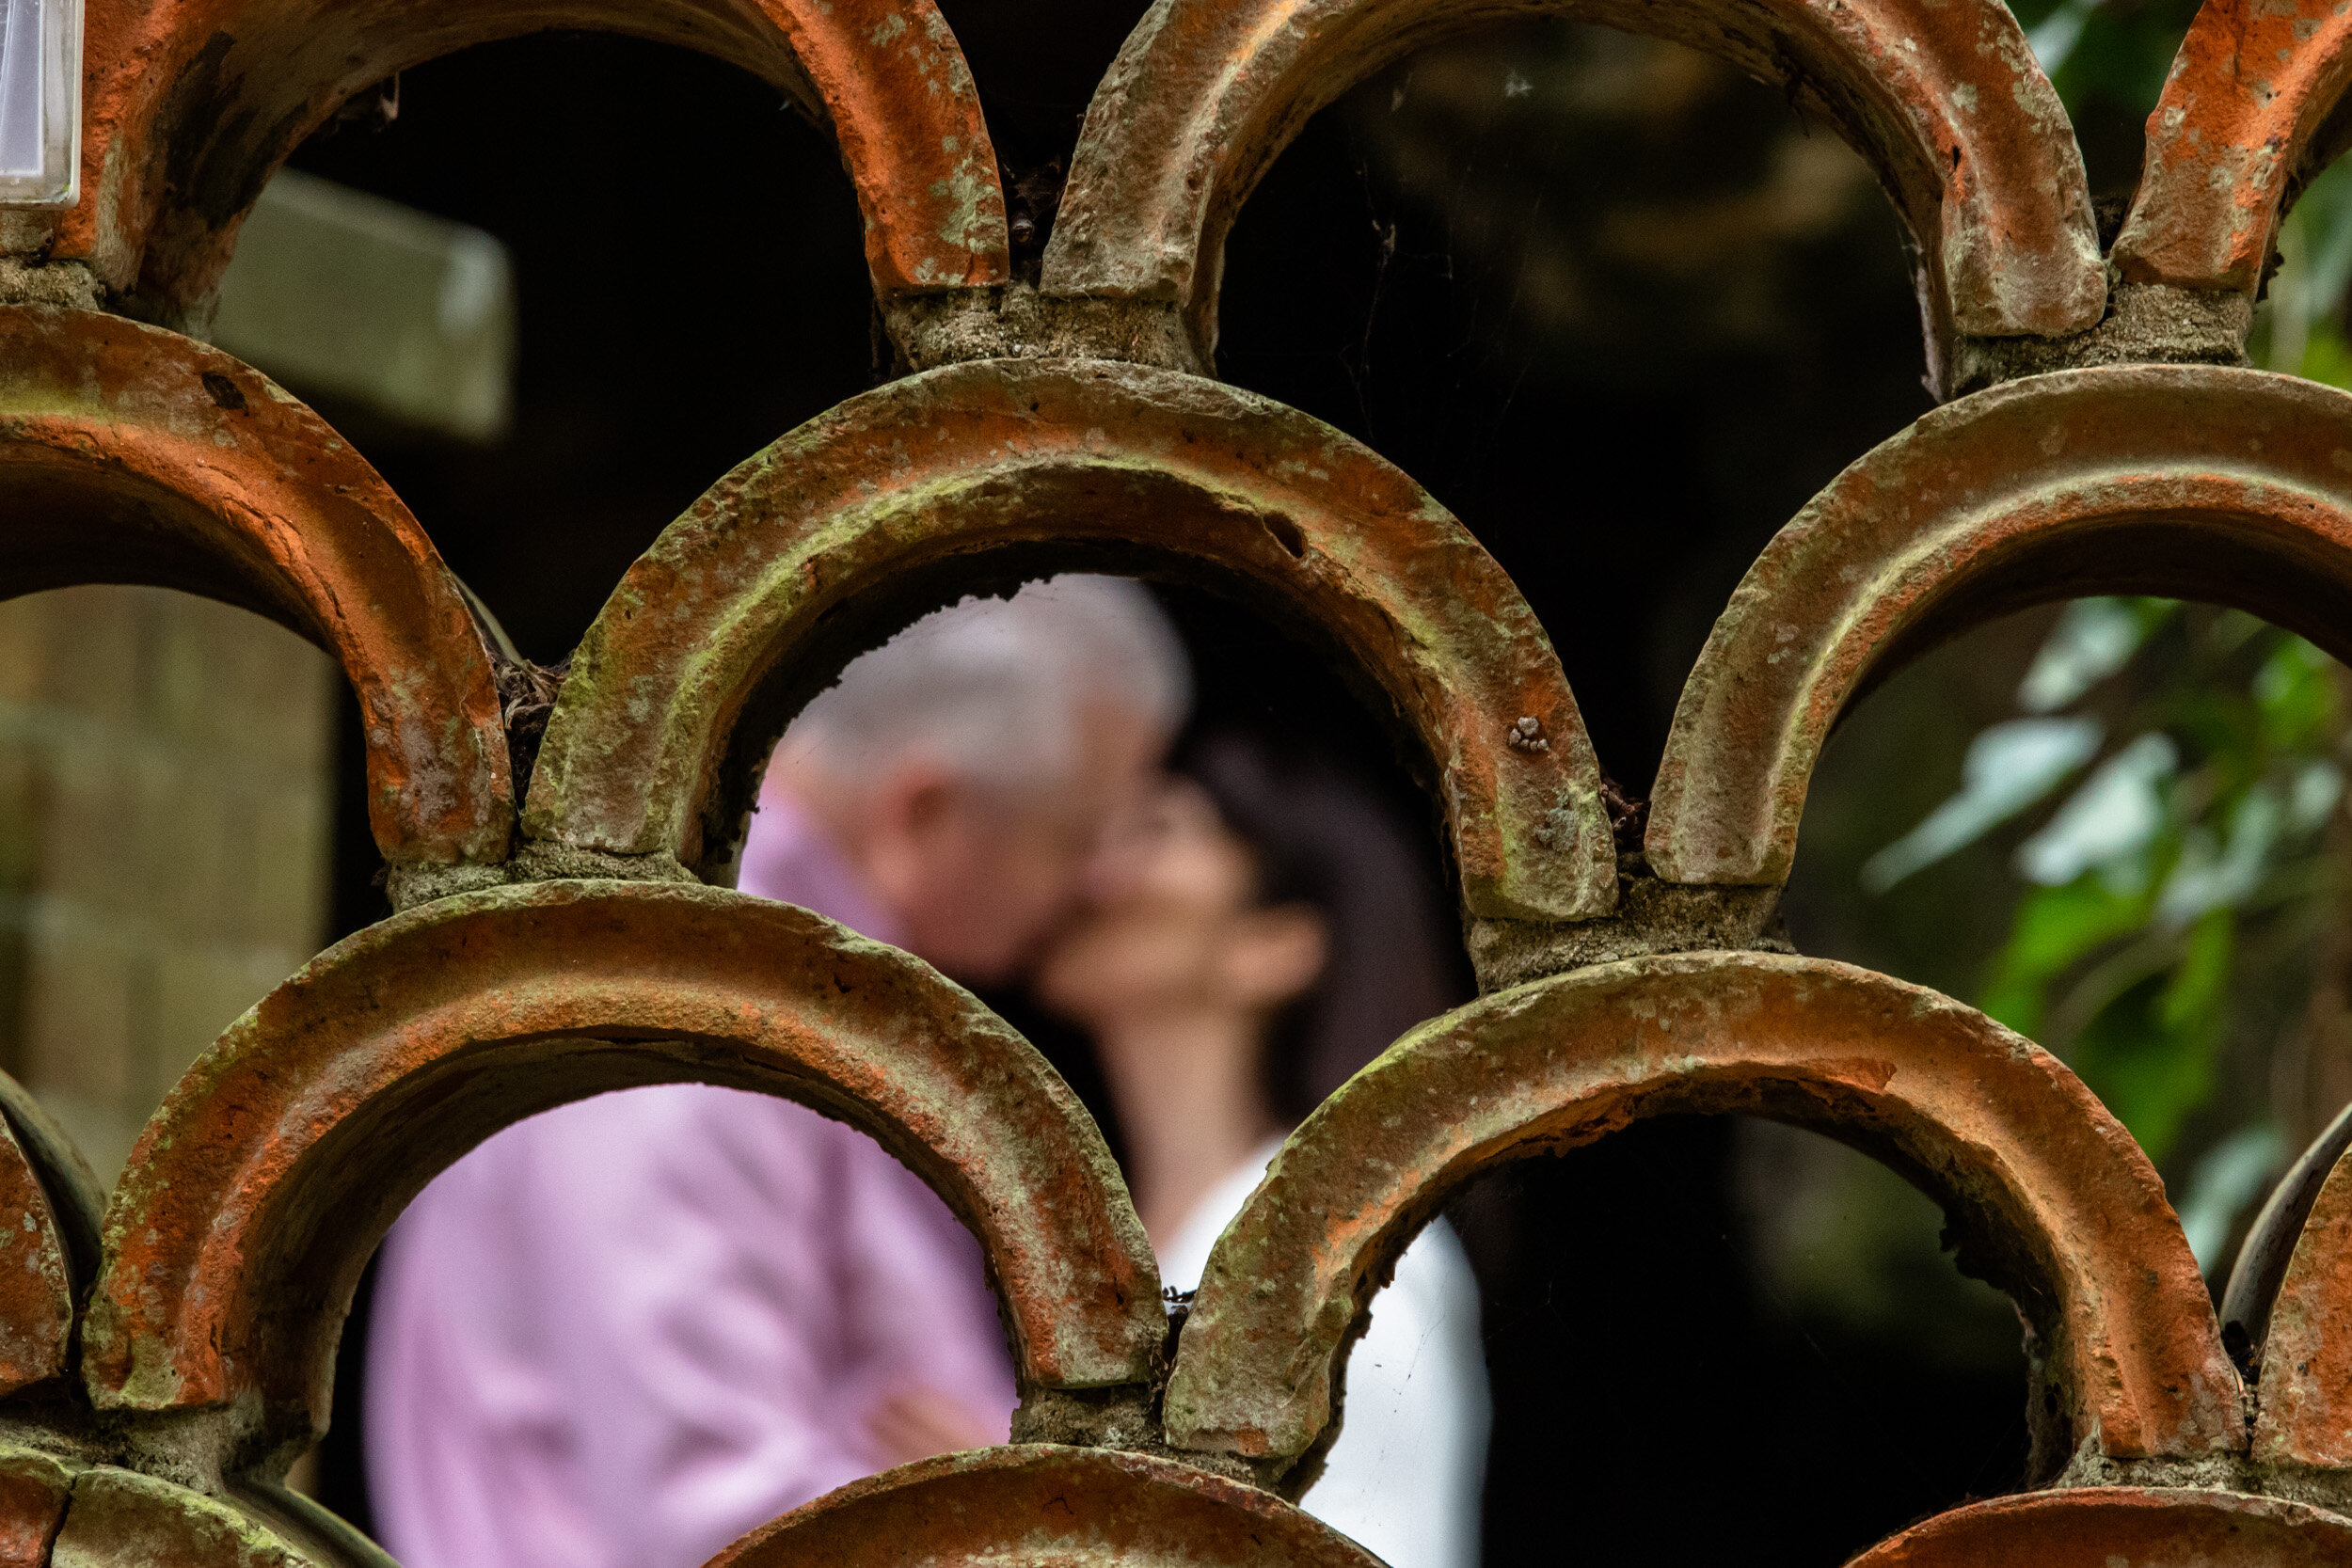 Surrey documentary wedding photographer